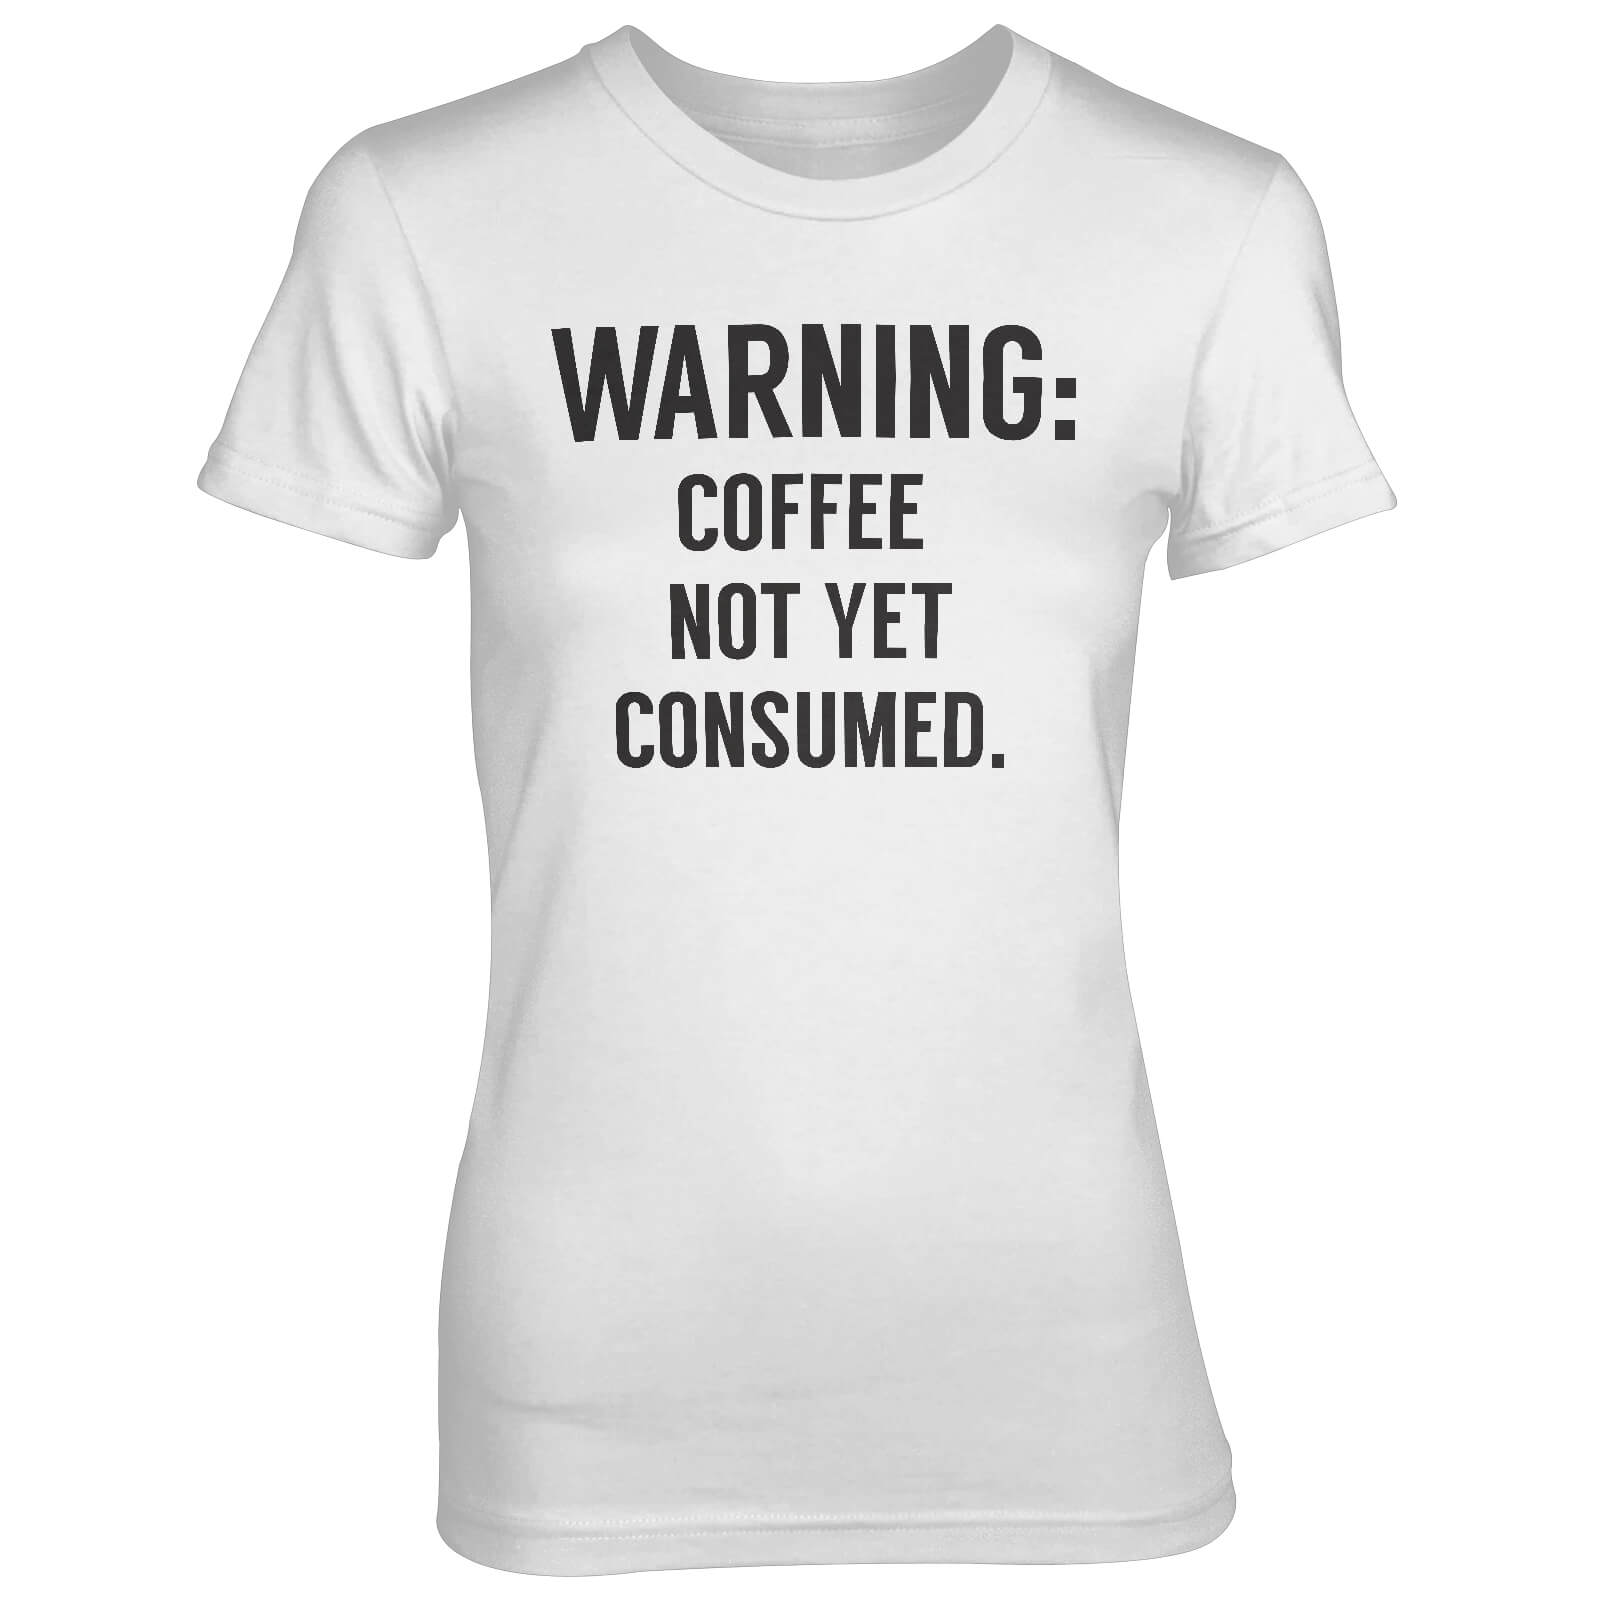 Warning: Coffee Not Yet Consumed Women's White T-Shirt - S - White